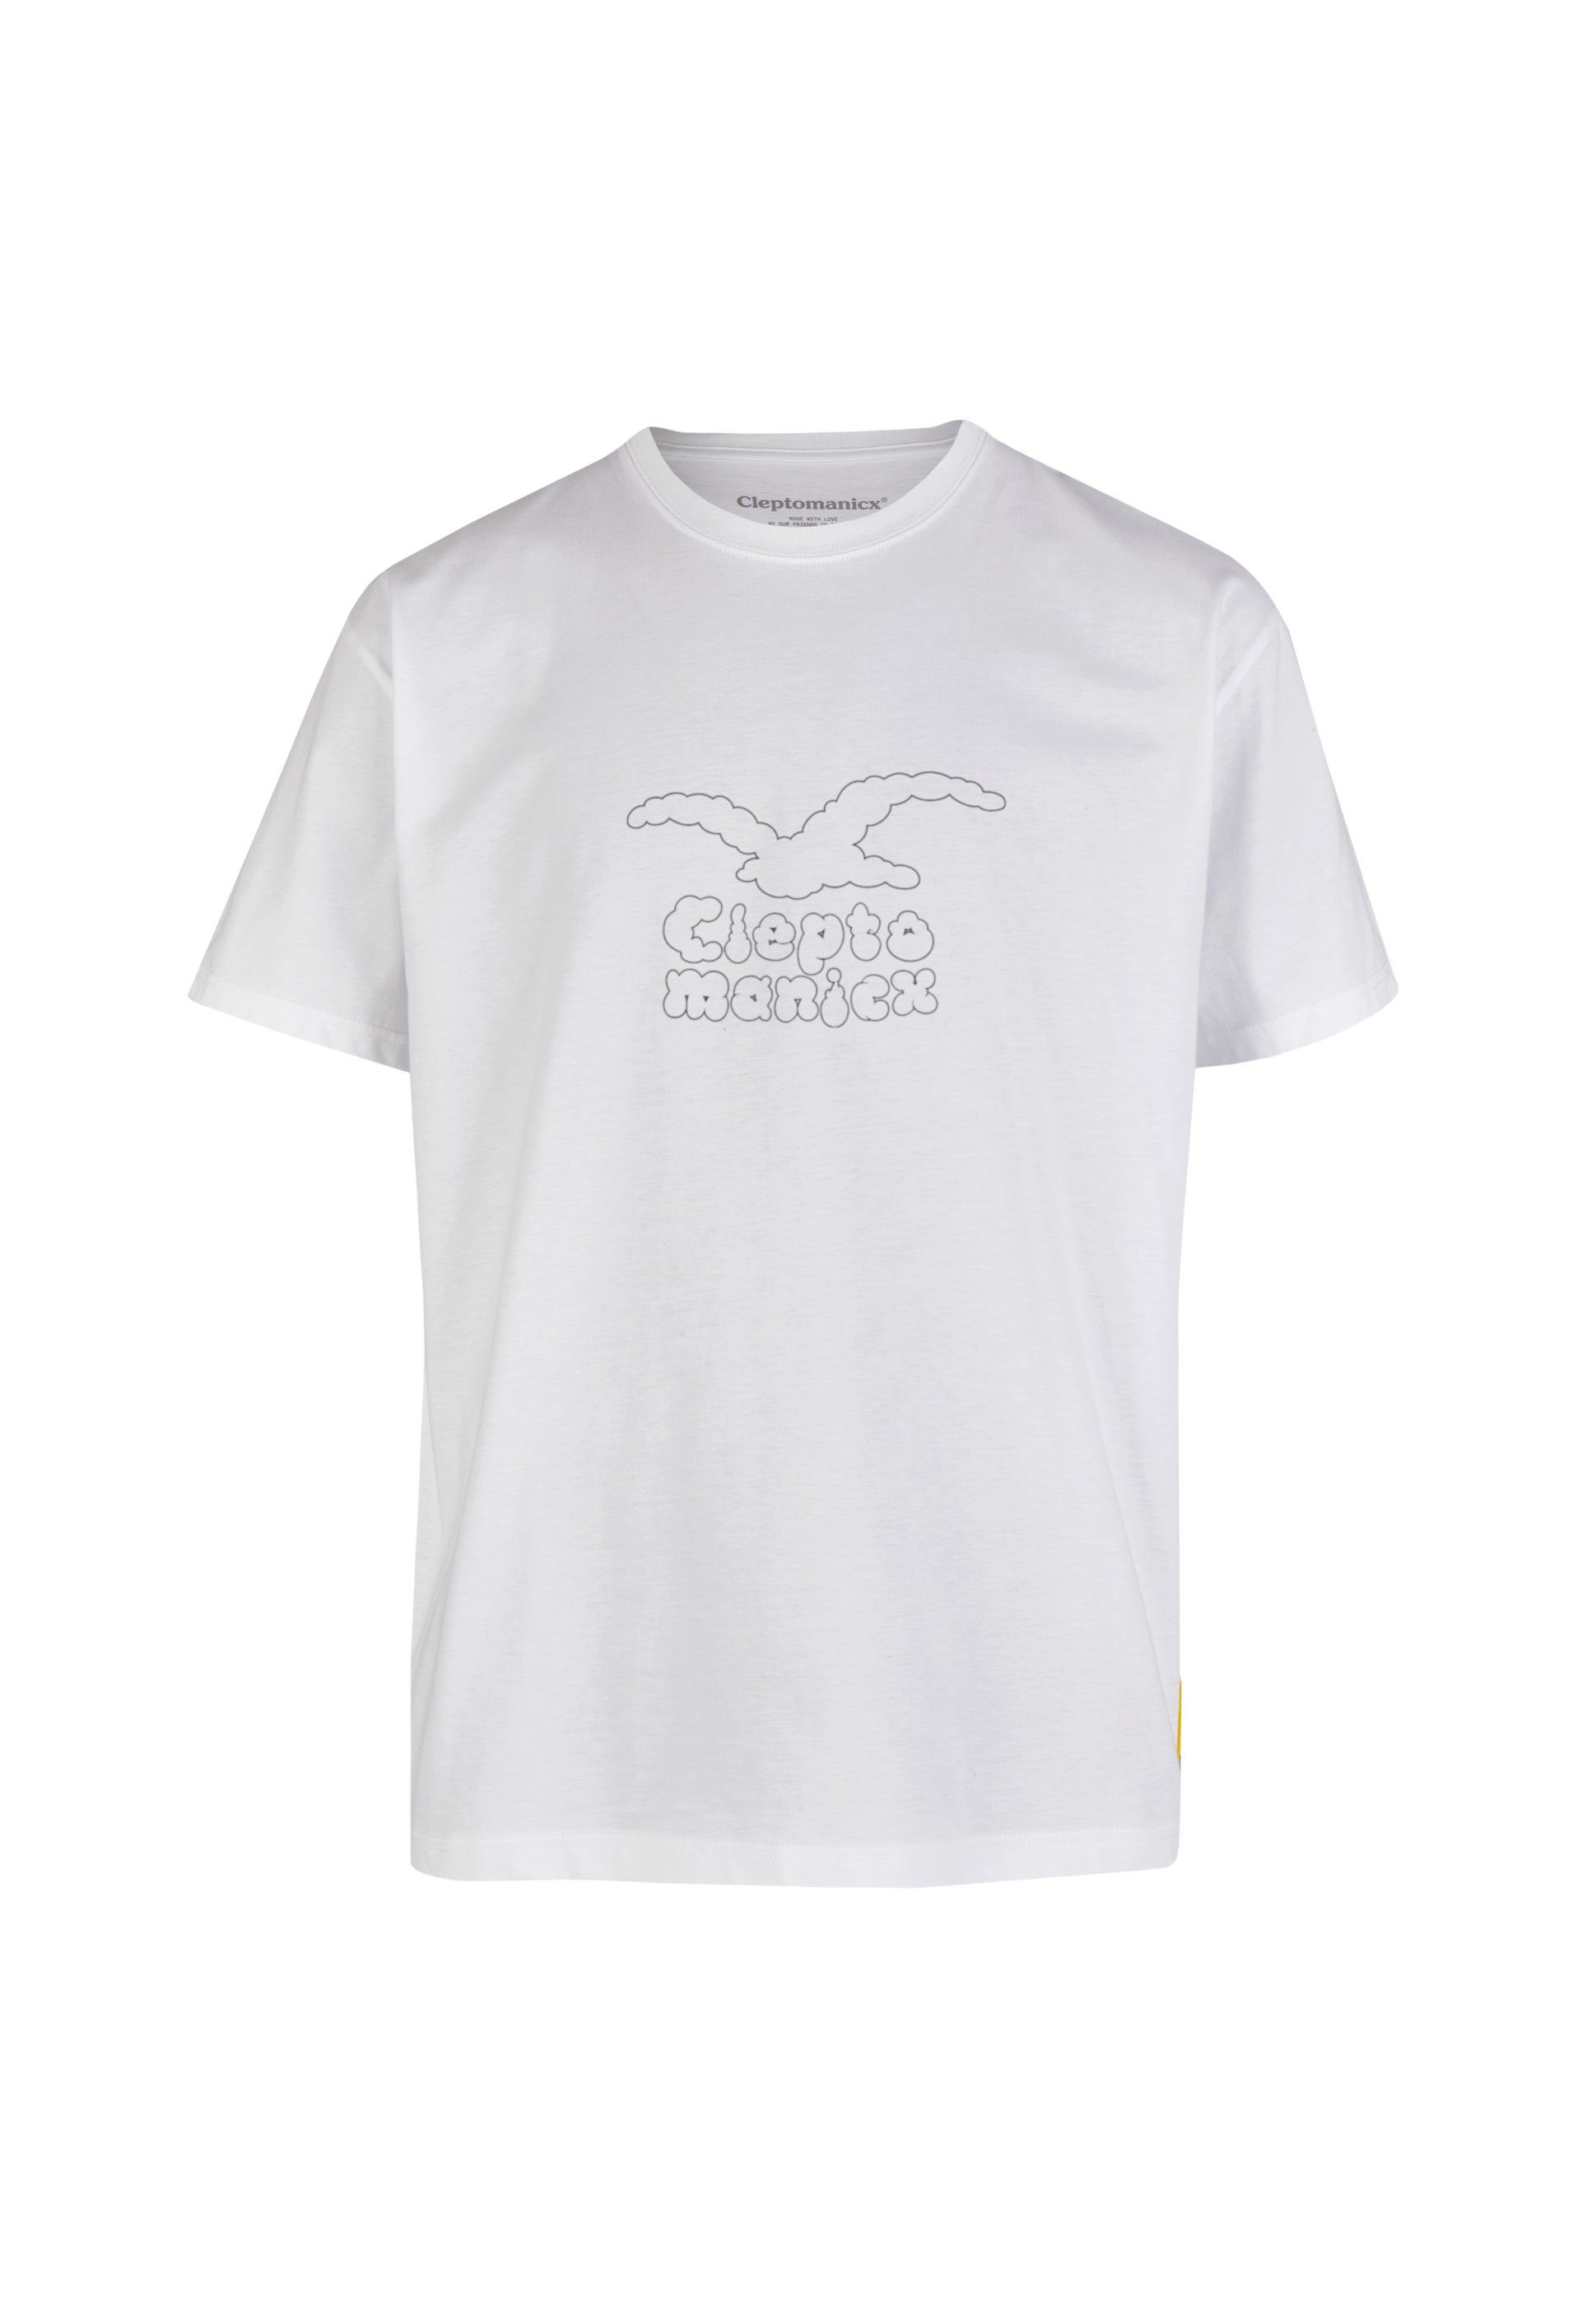 Cleptomanicx T-Shirt Clouds mit lockerem Schnitt